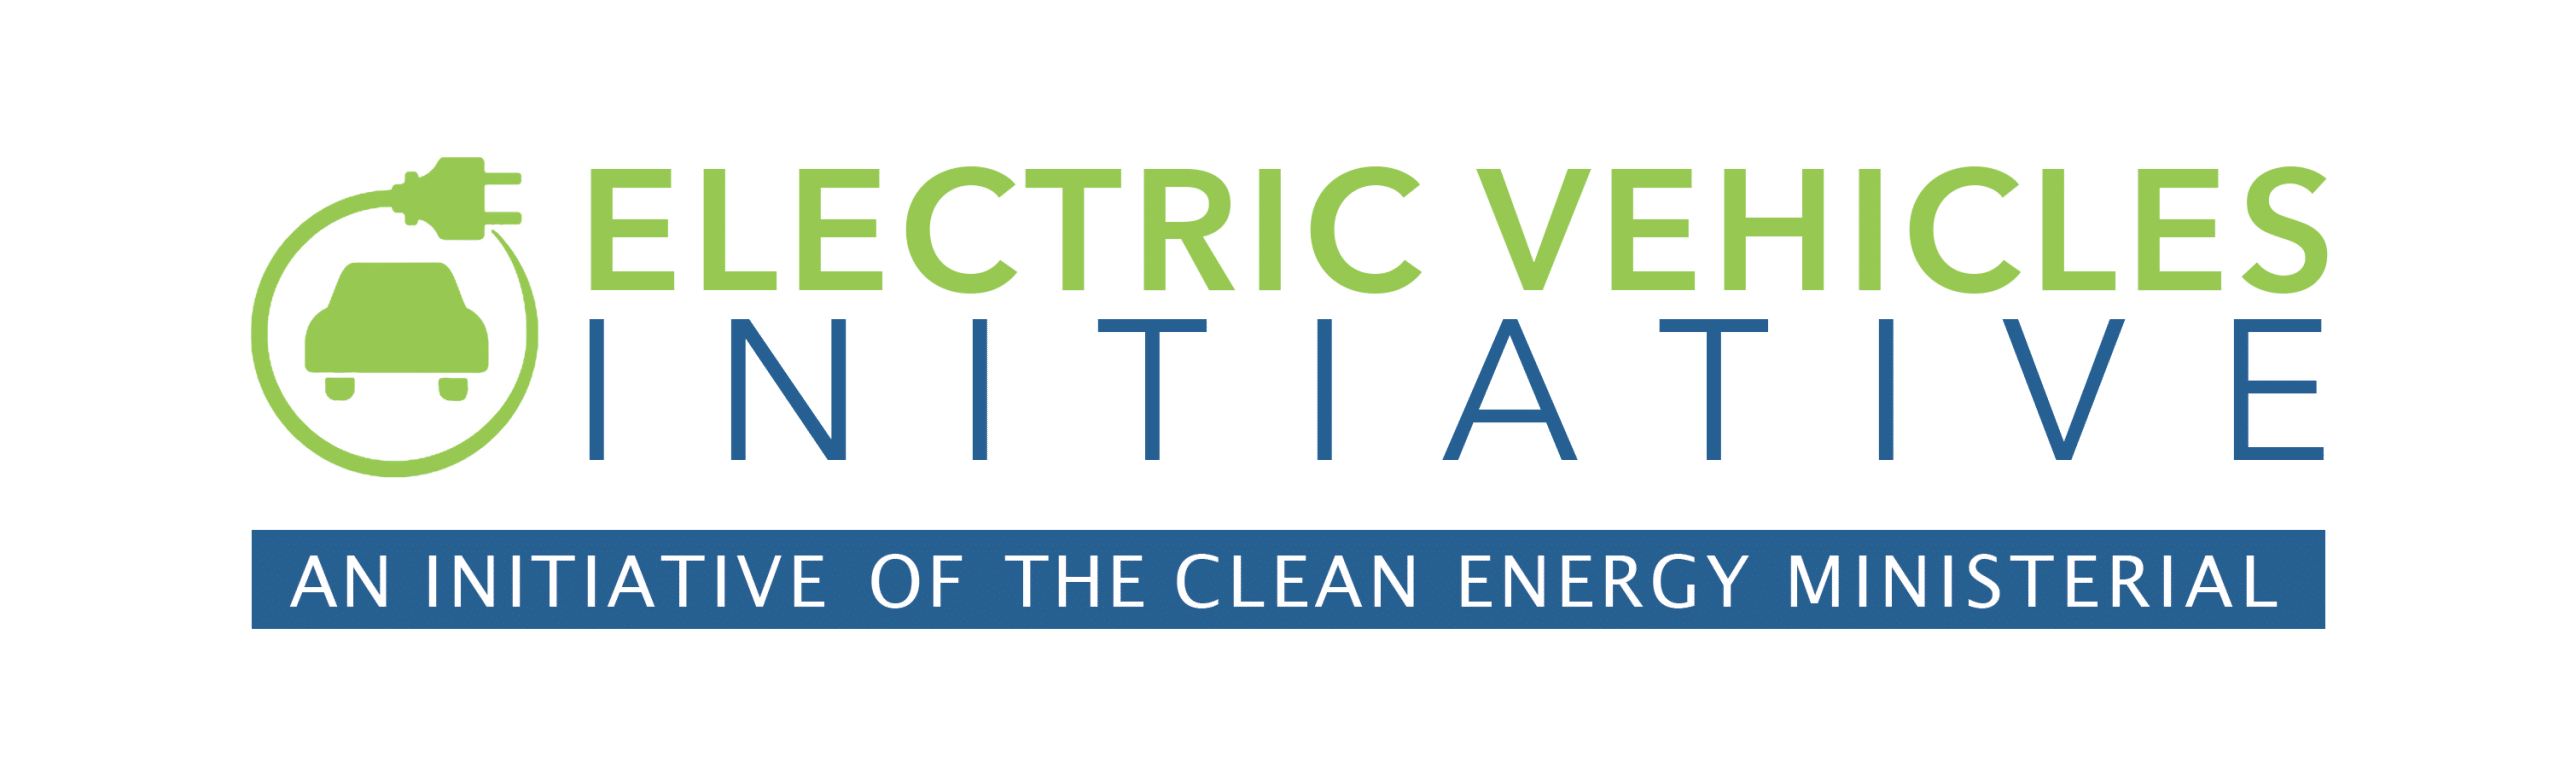 Electric vehicles initiative